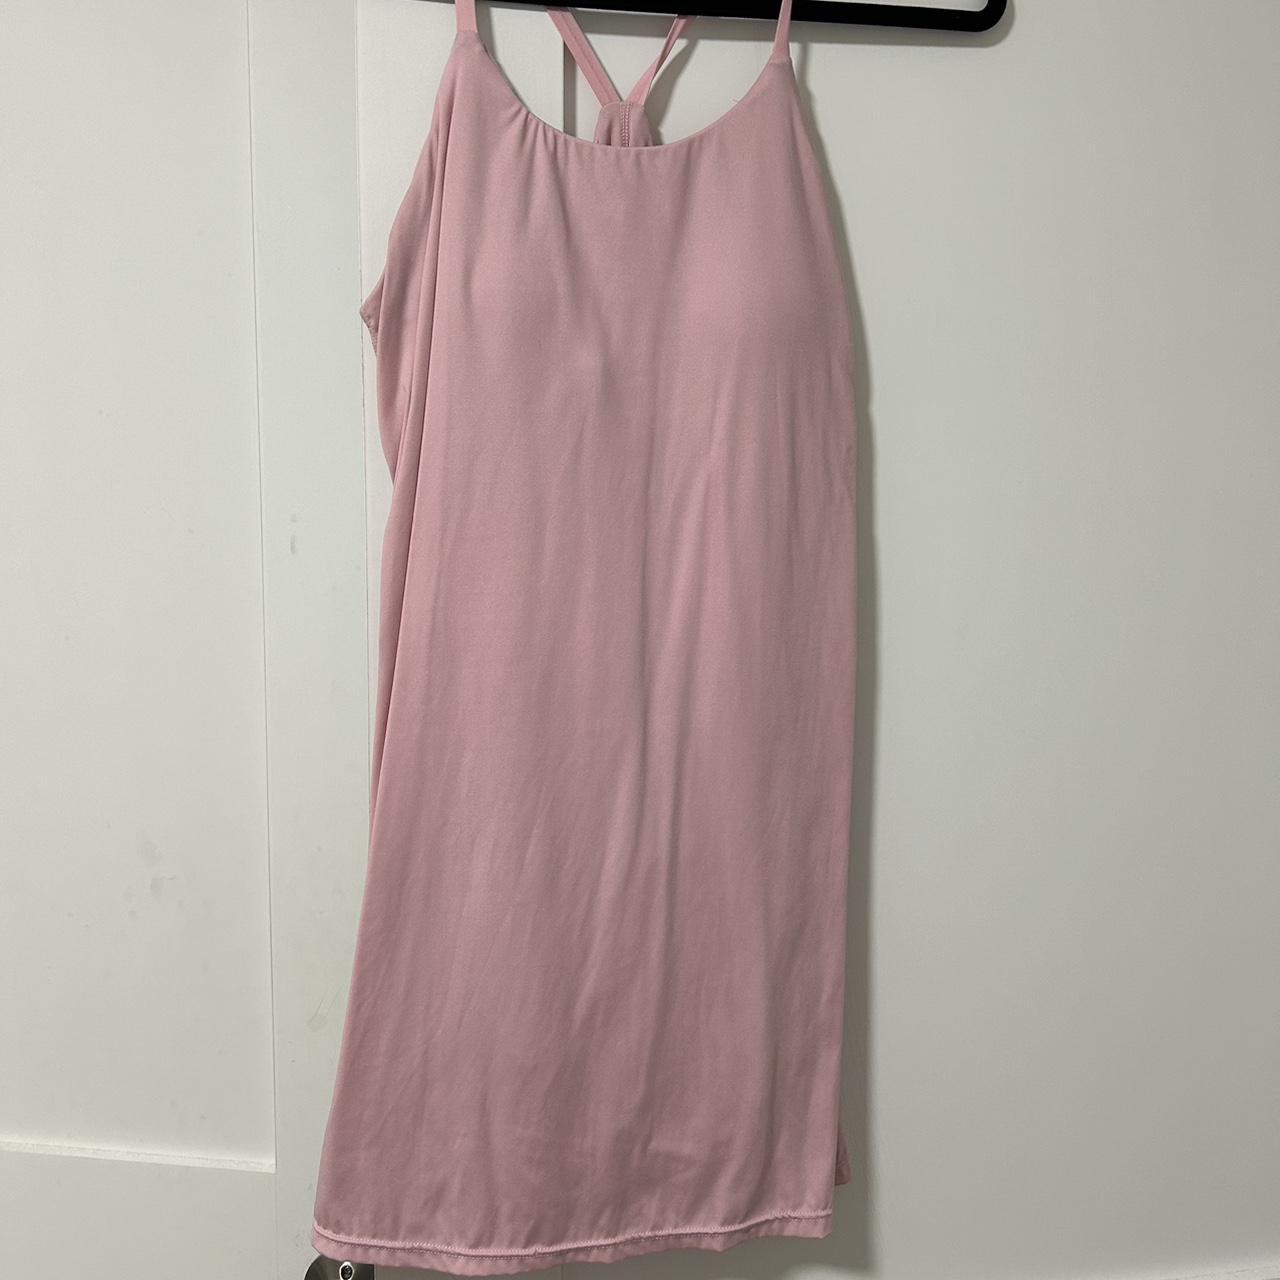 Tennis Dress - Amazon Built in bra and shorts - Depop